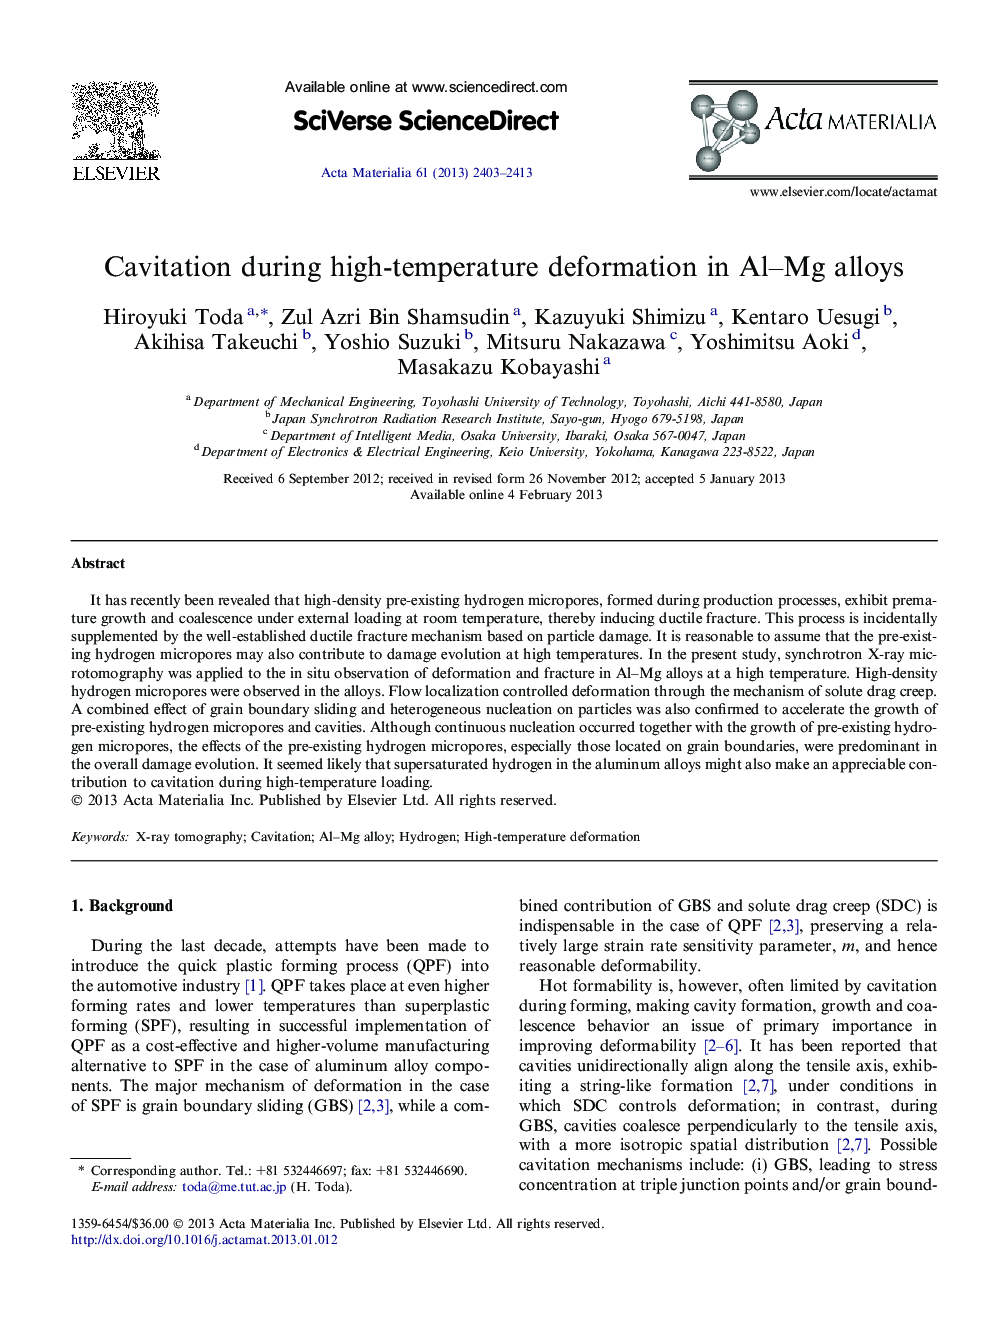 Cavitation during high-temperature deformation in Al-Mg alloys